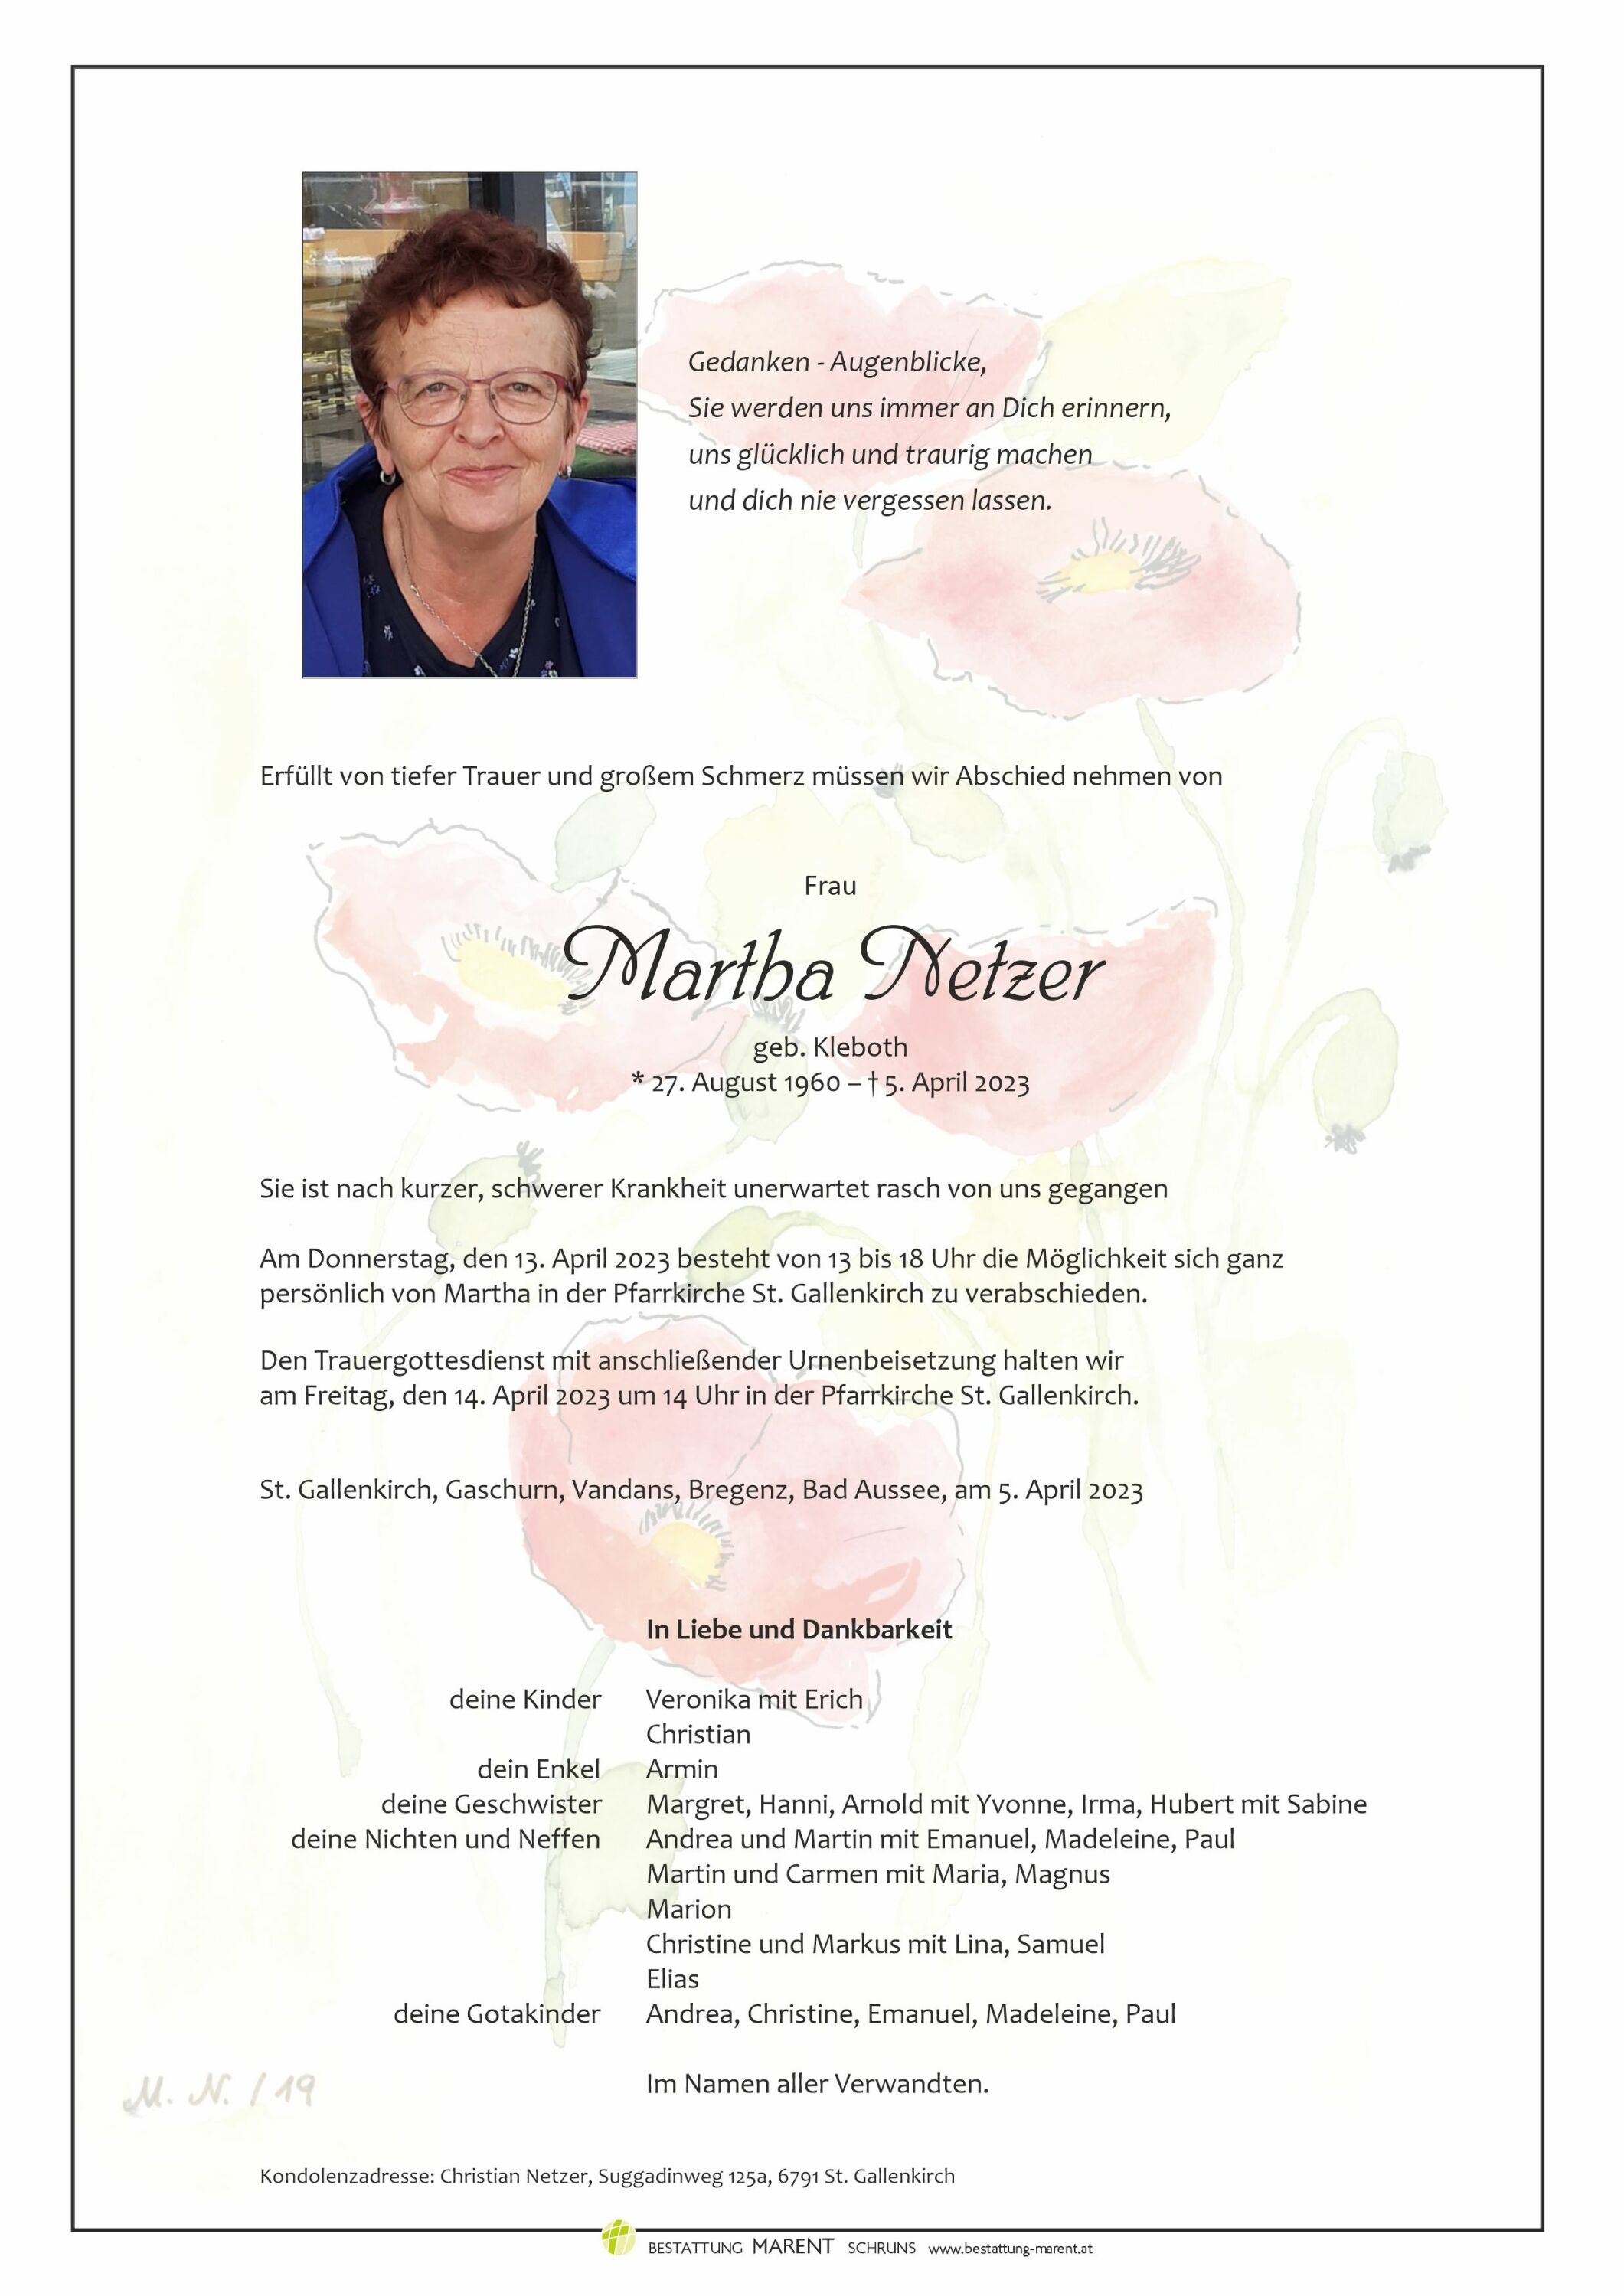 Martha Netzer